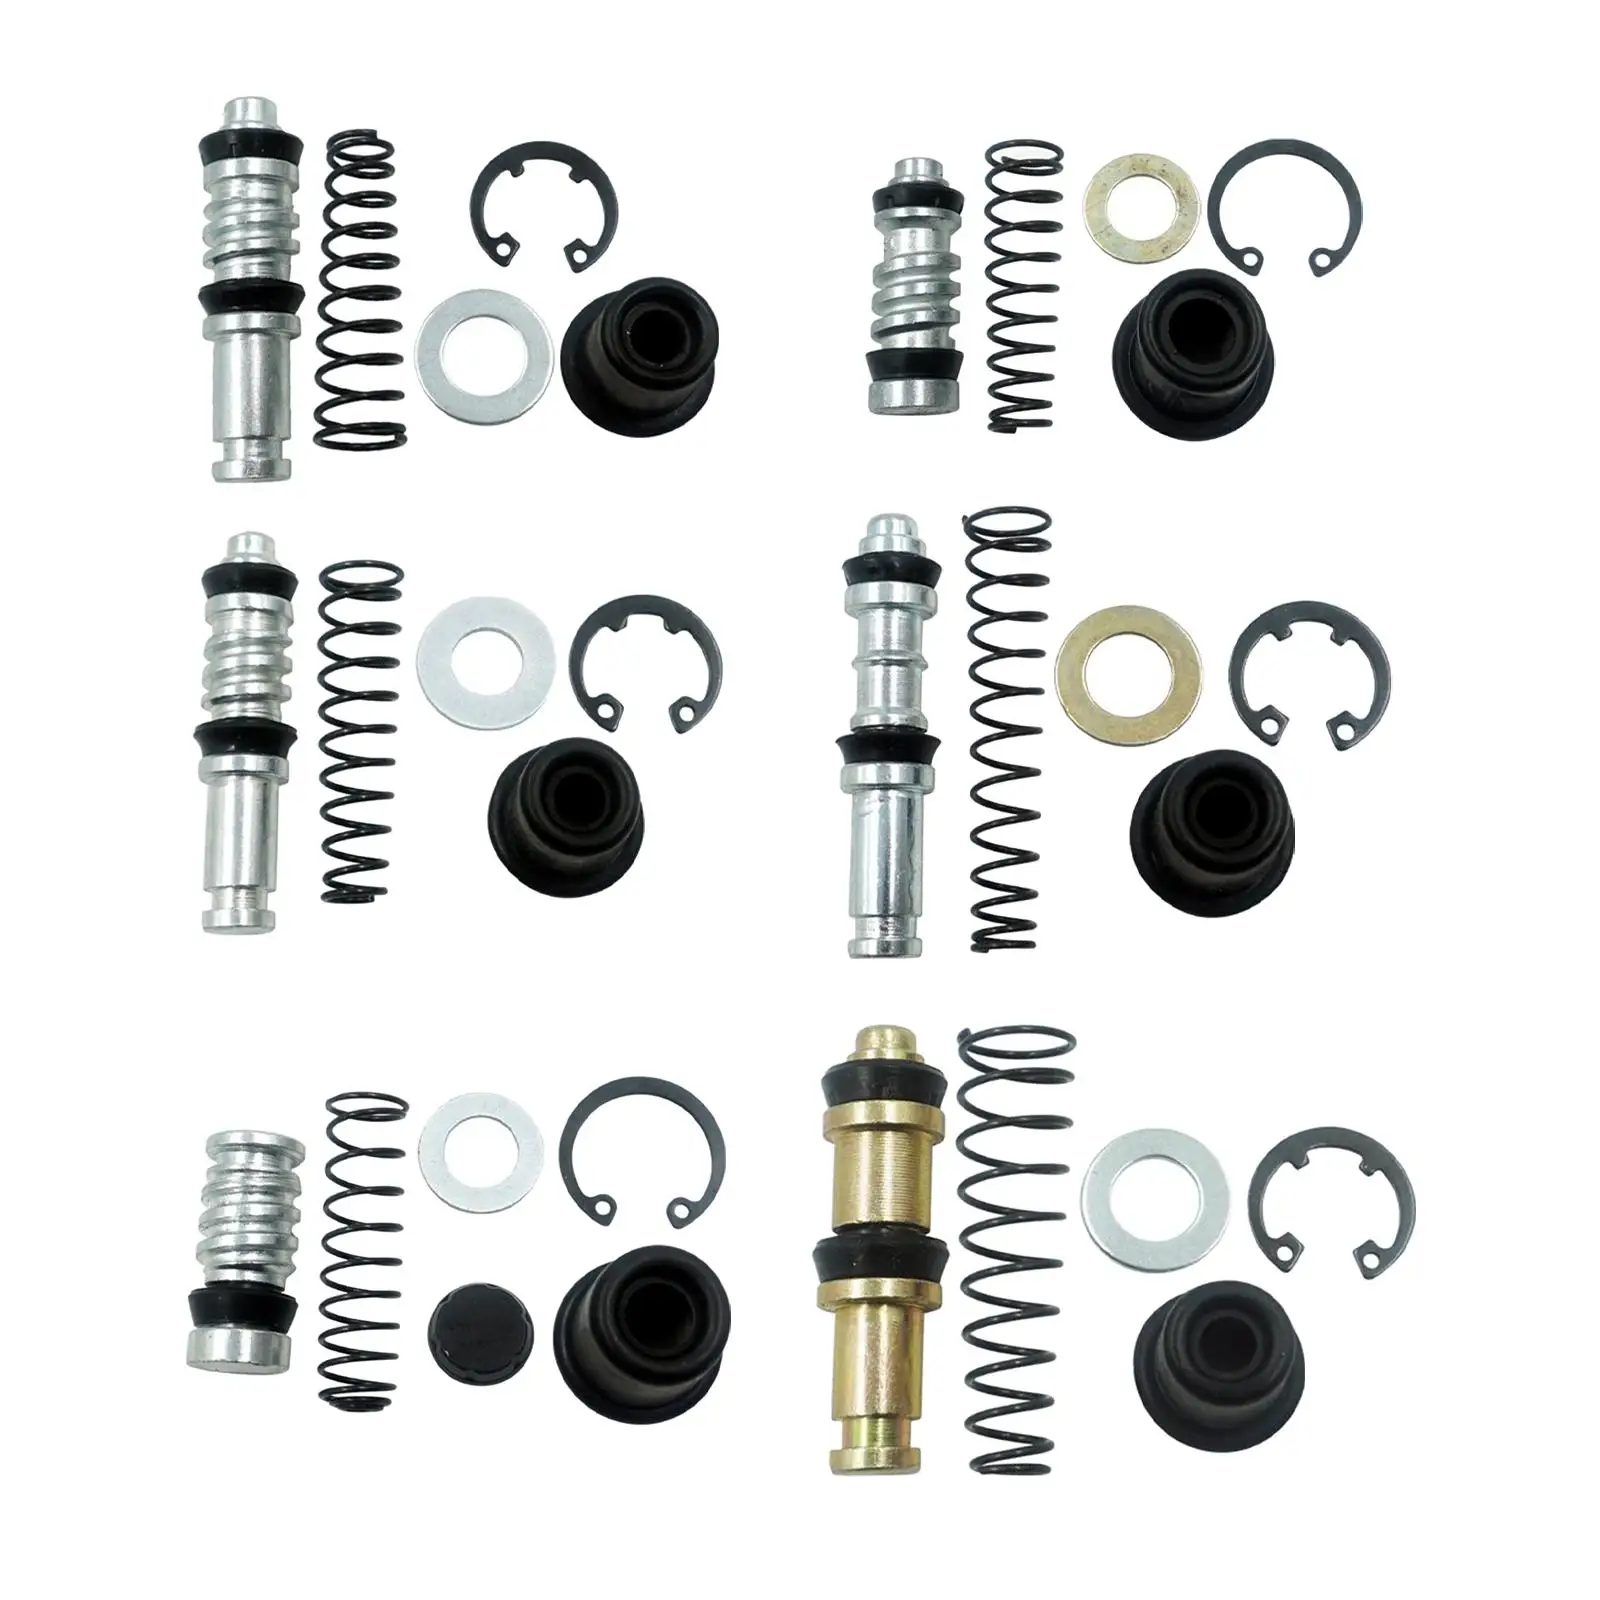 

Clutch Brake Pump Piston Plunger Repair Kit Master Cylinder Rebuild Repair Parts for Motocross